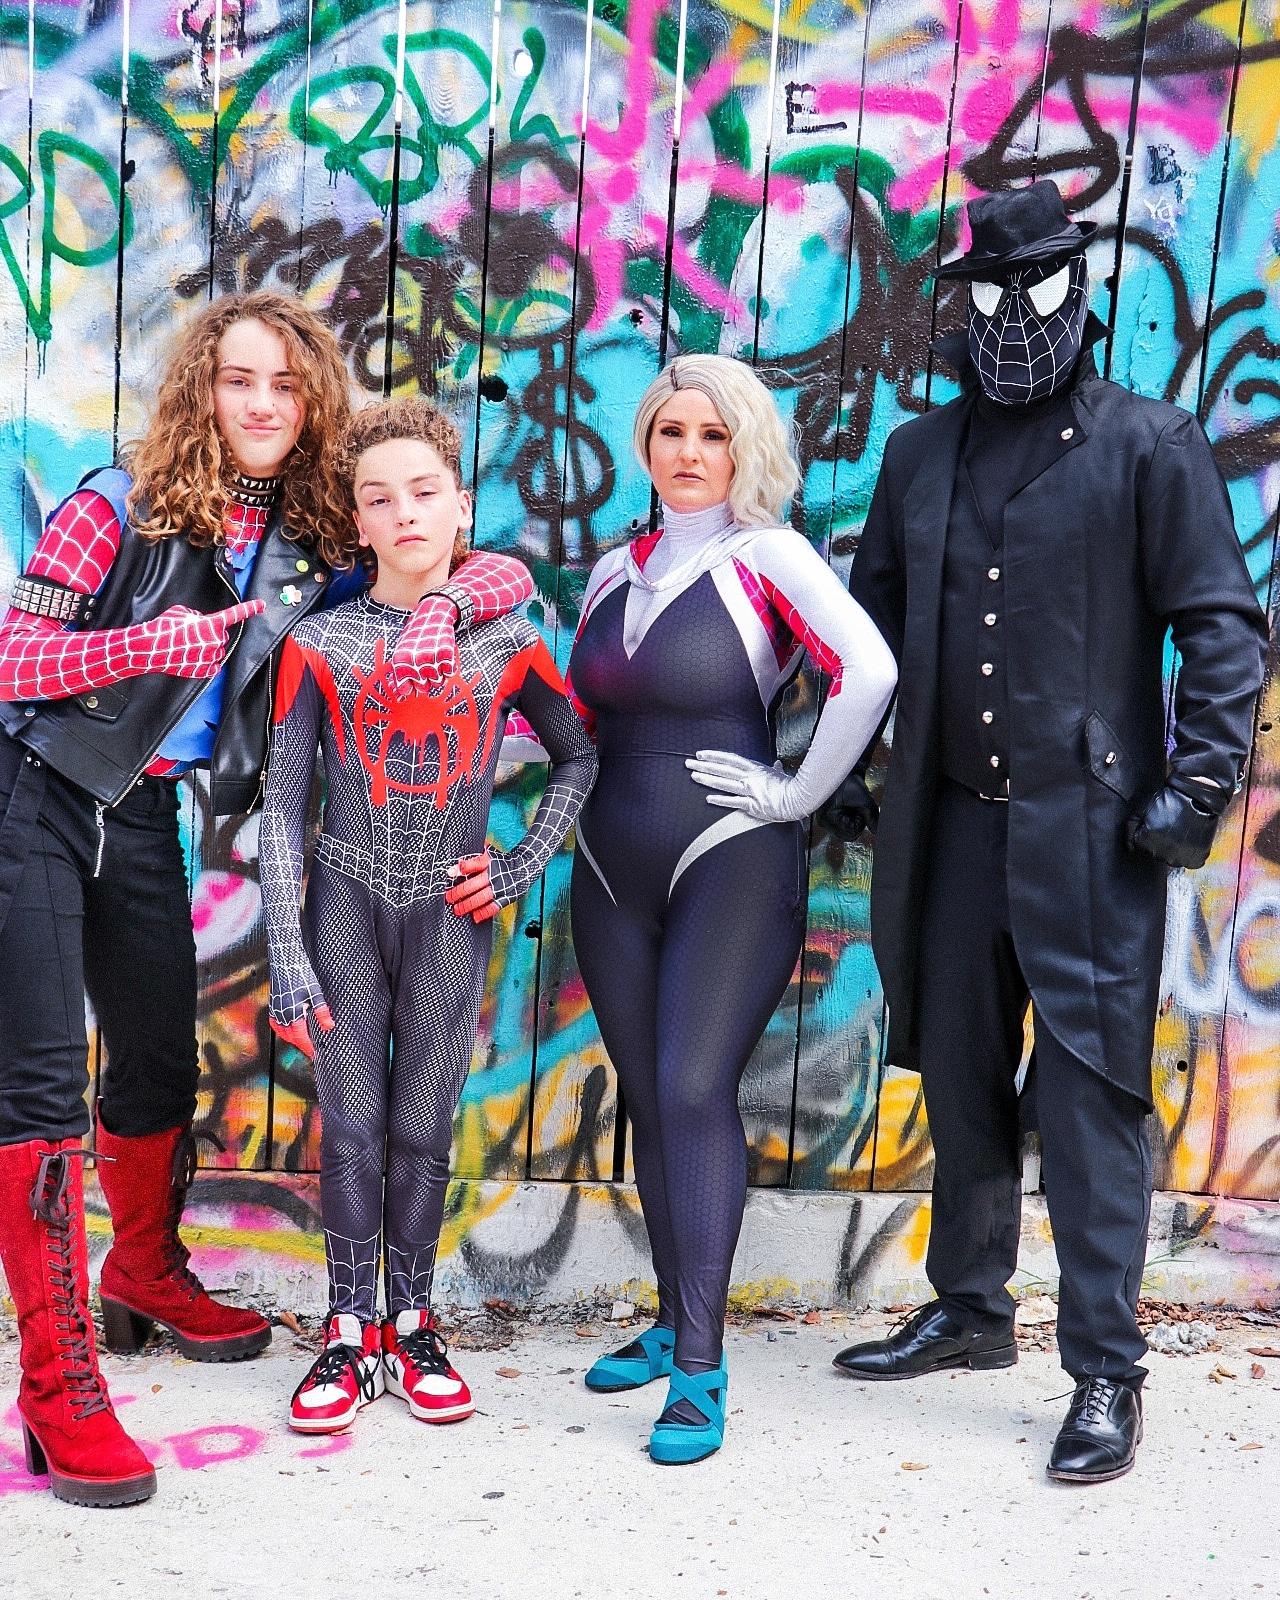 Spider-Verse costumes